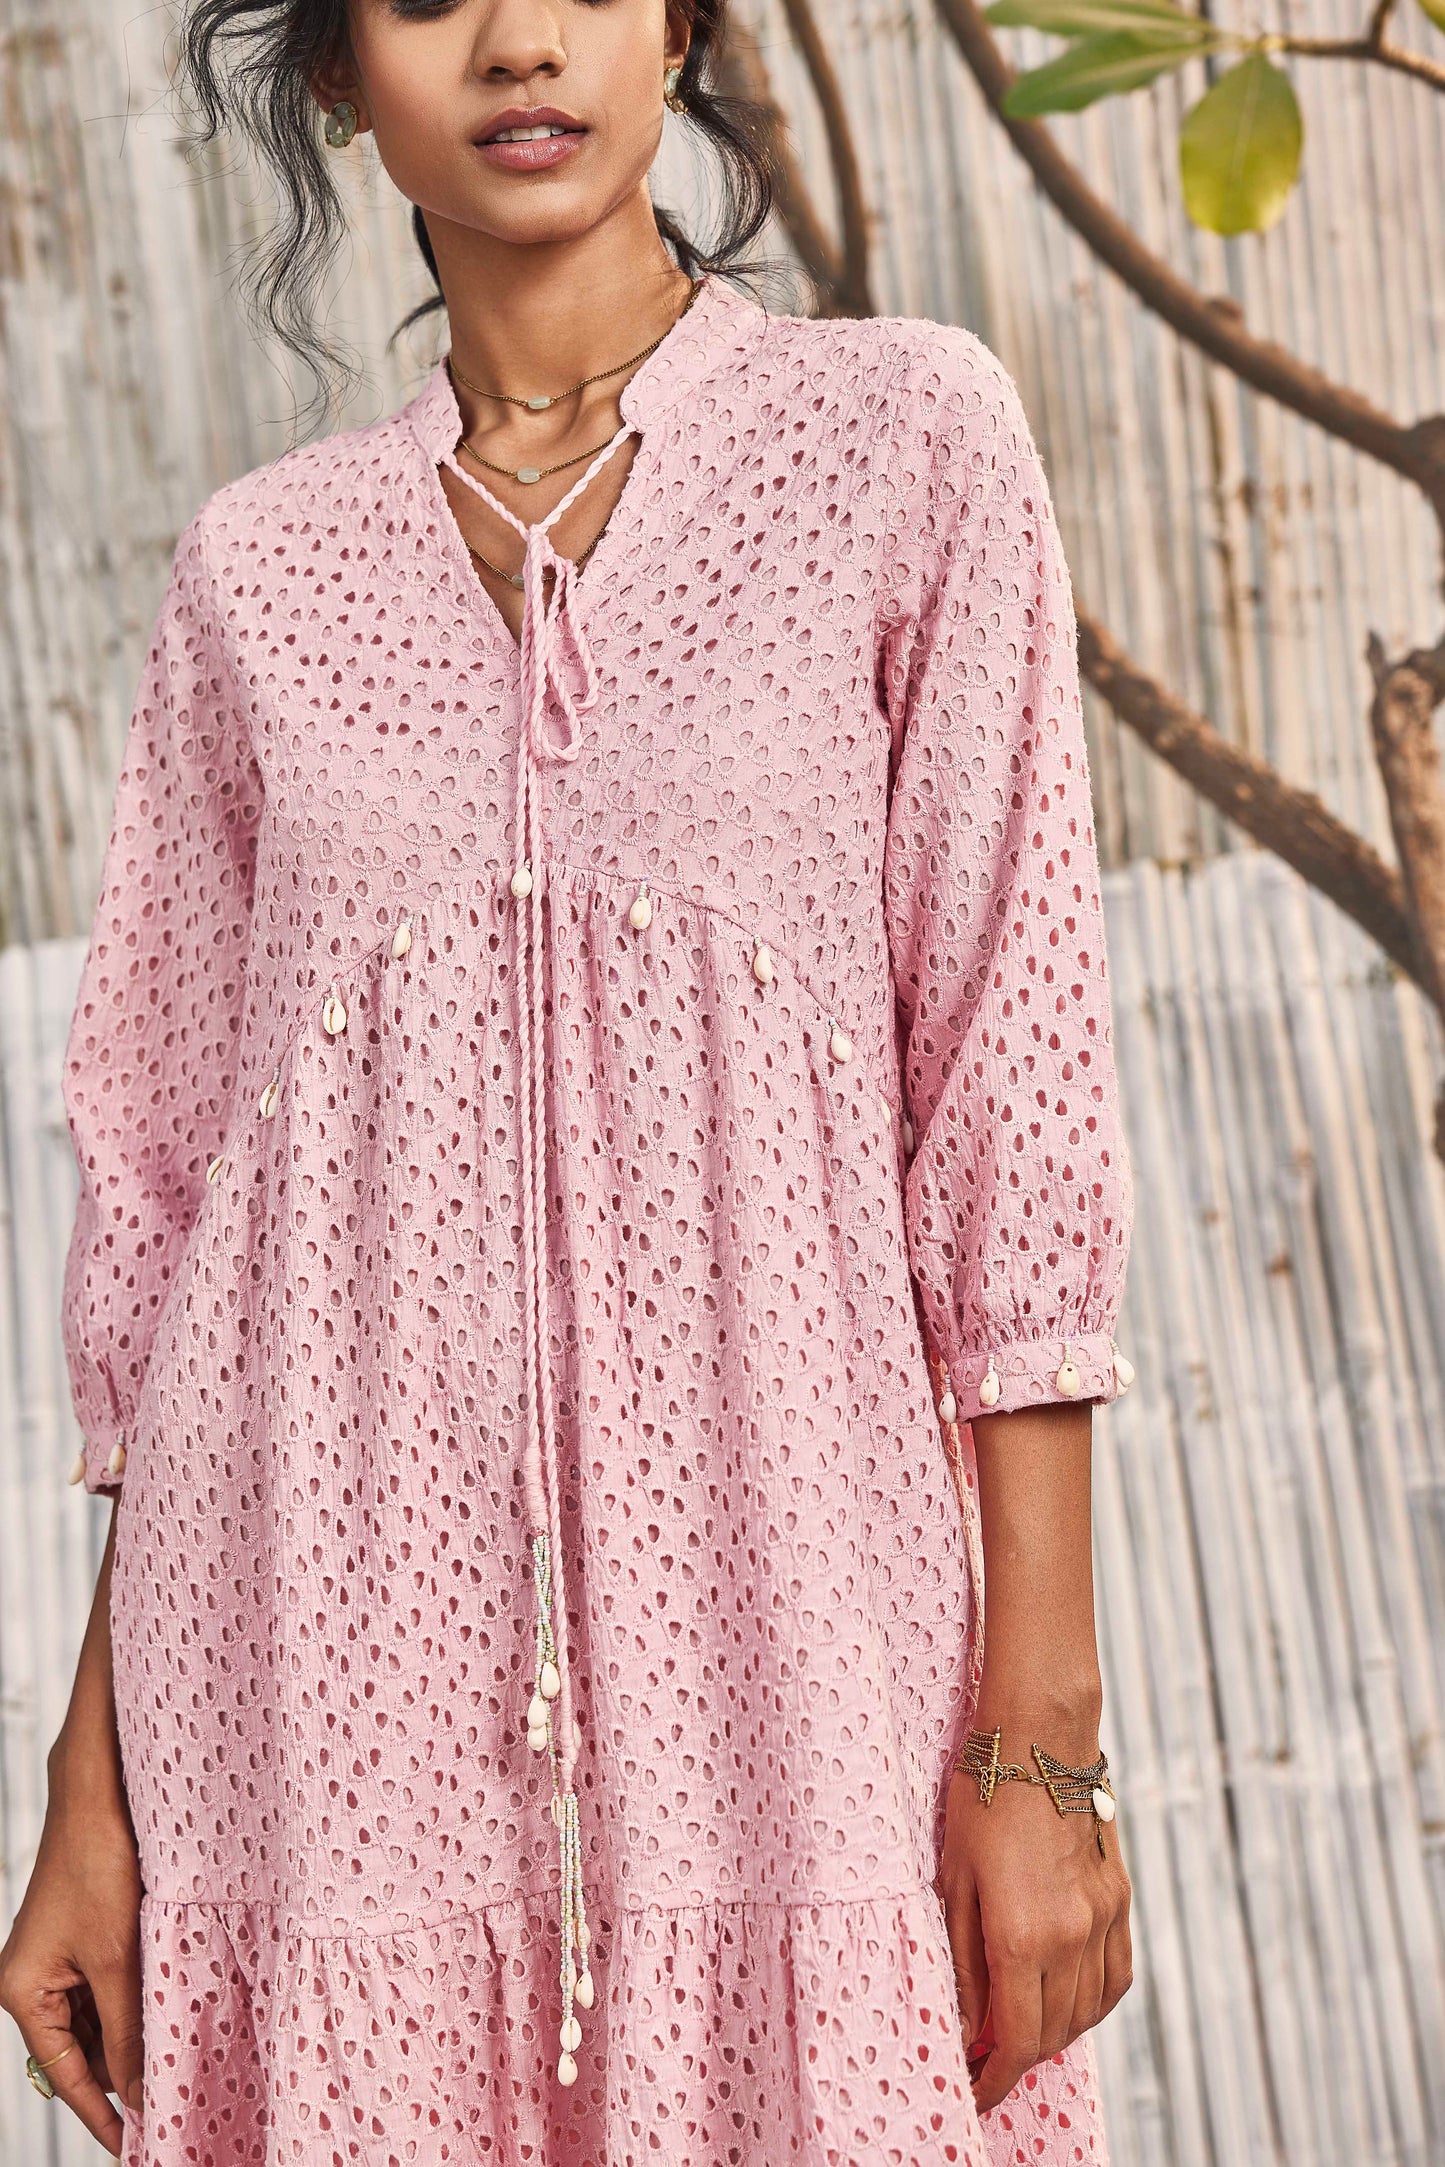 Breezy Cotton Cutwork Dress in Blush Pink Dresses Midi Dresses, Natural, Pink, Regular Fit, Resort Wear, Shores 23, Textured Charkhee Kamakhyaa